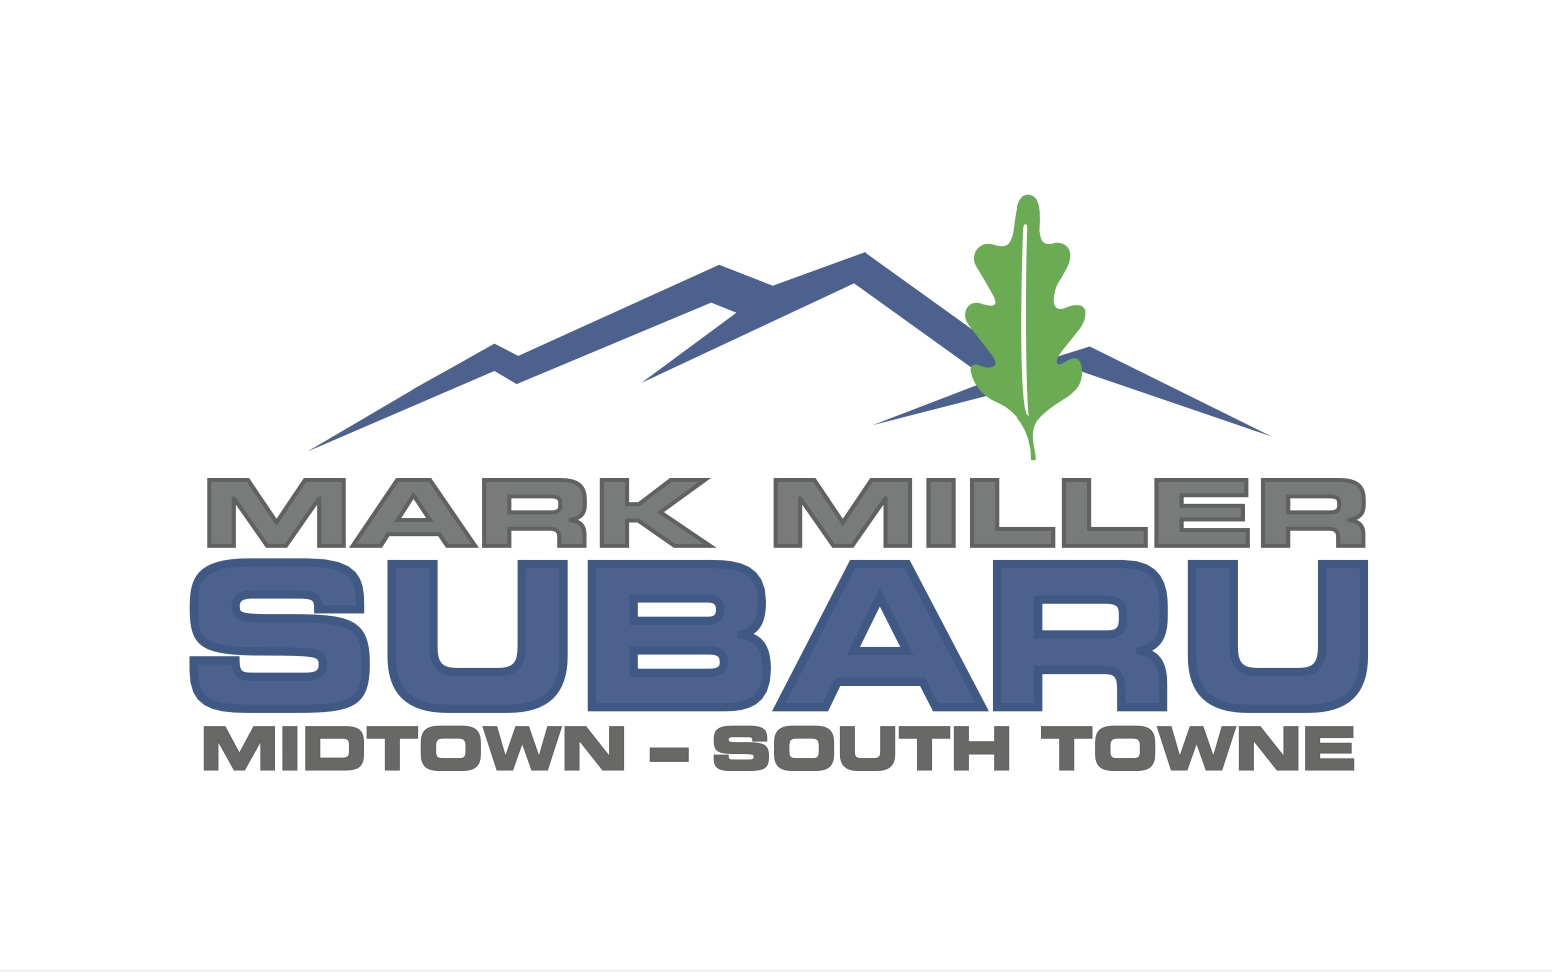 Mark Miller Subaru South Towne